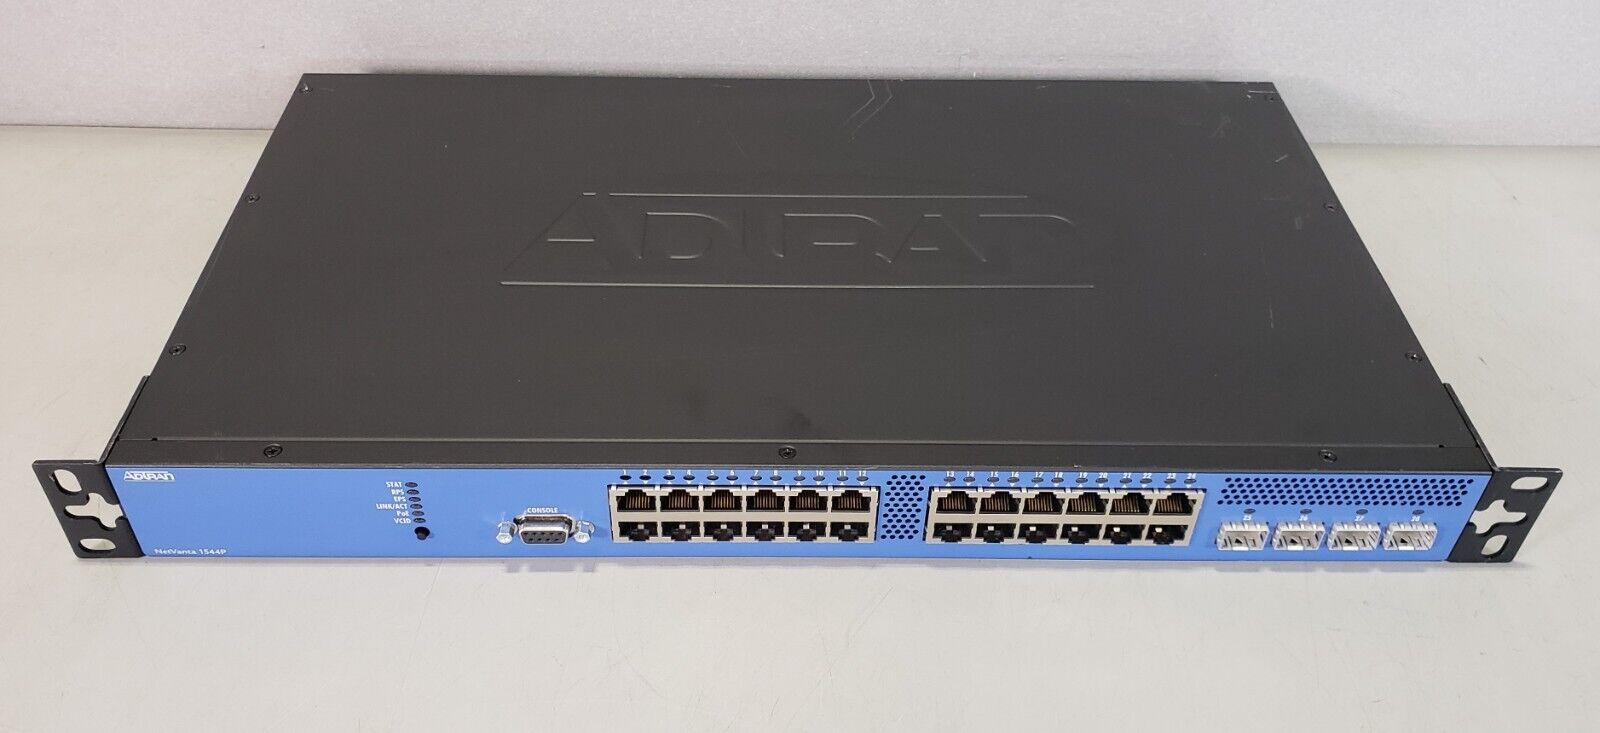 Adtran NetVanta 1544P 28-port PoE Layer 3 Gigabit Ethernet Switch P/N: 1702545G1